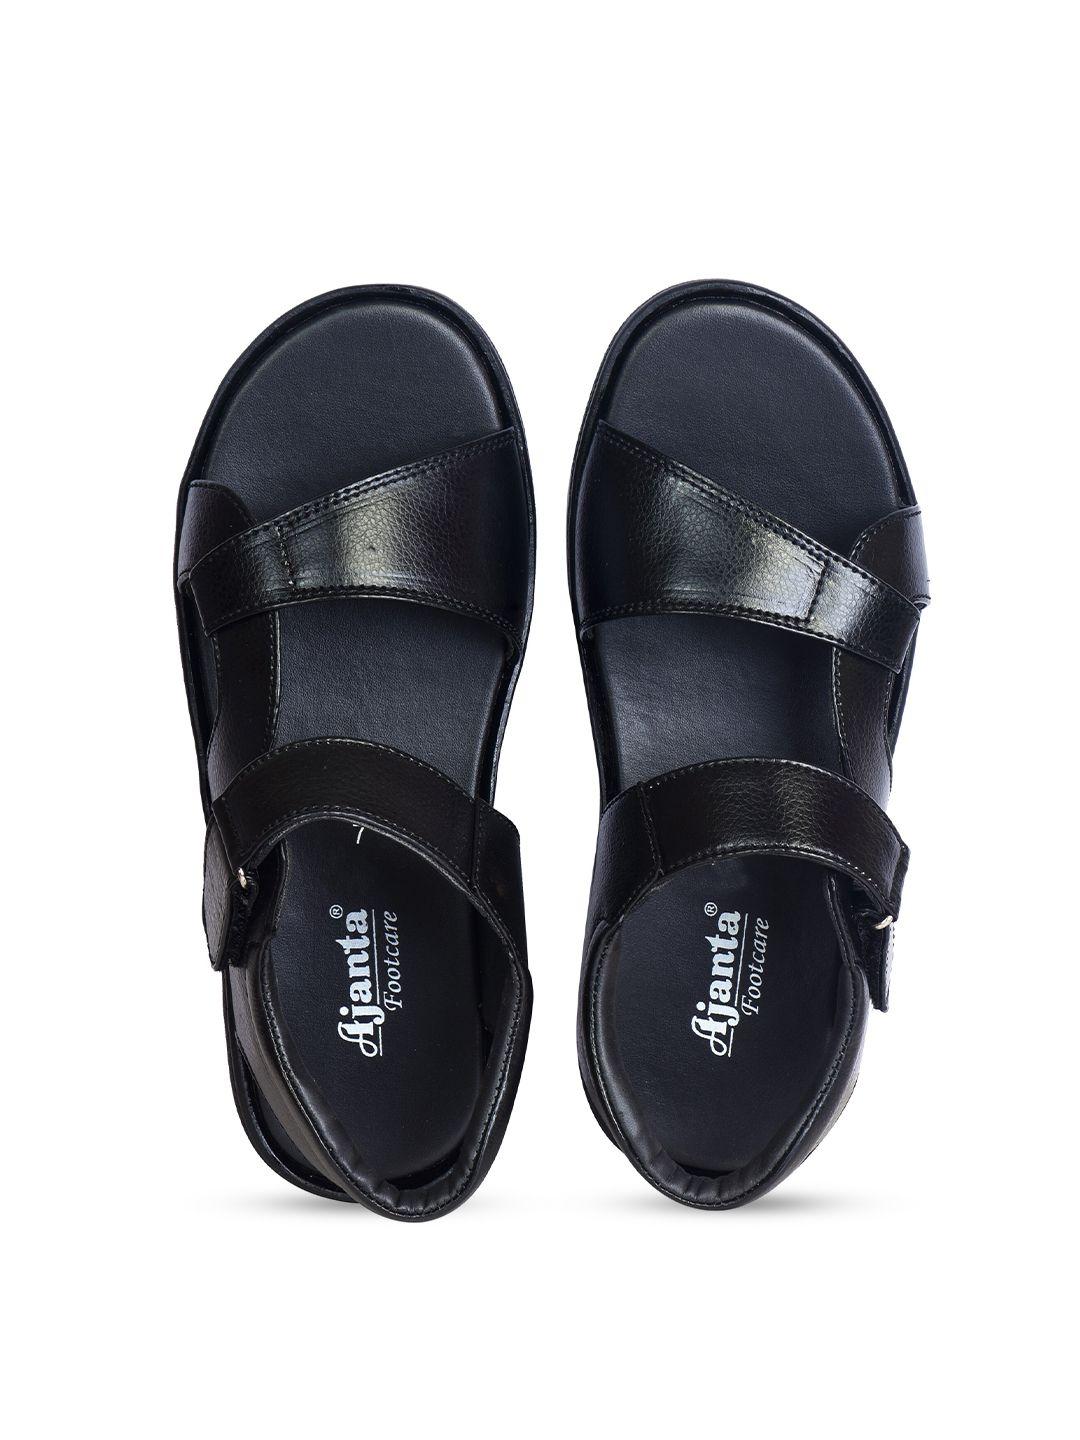 ajanta-men-black-comfort-sandals